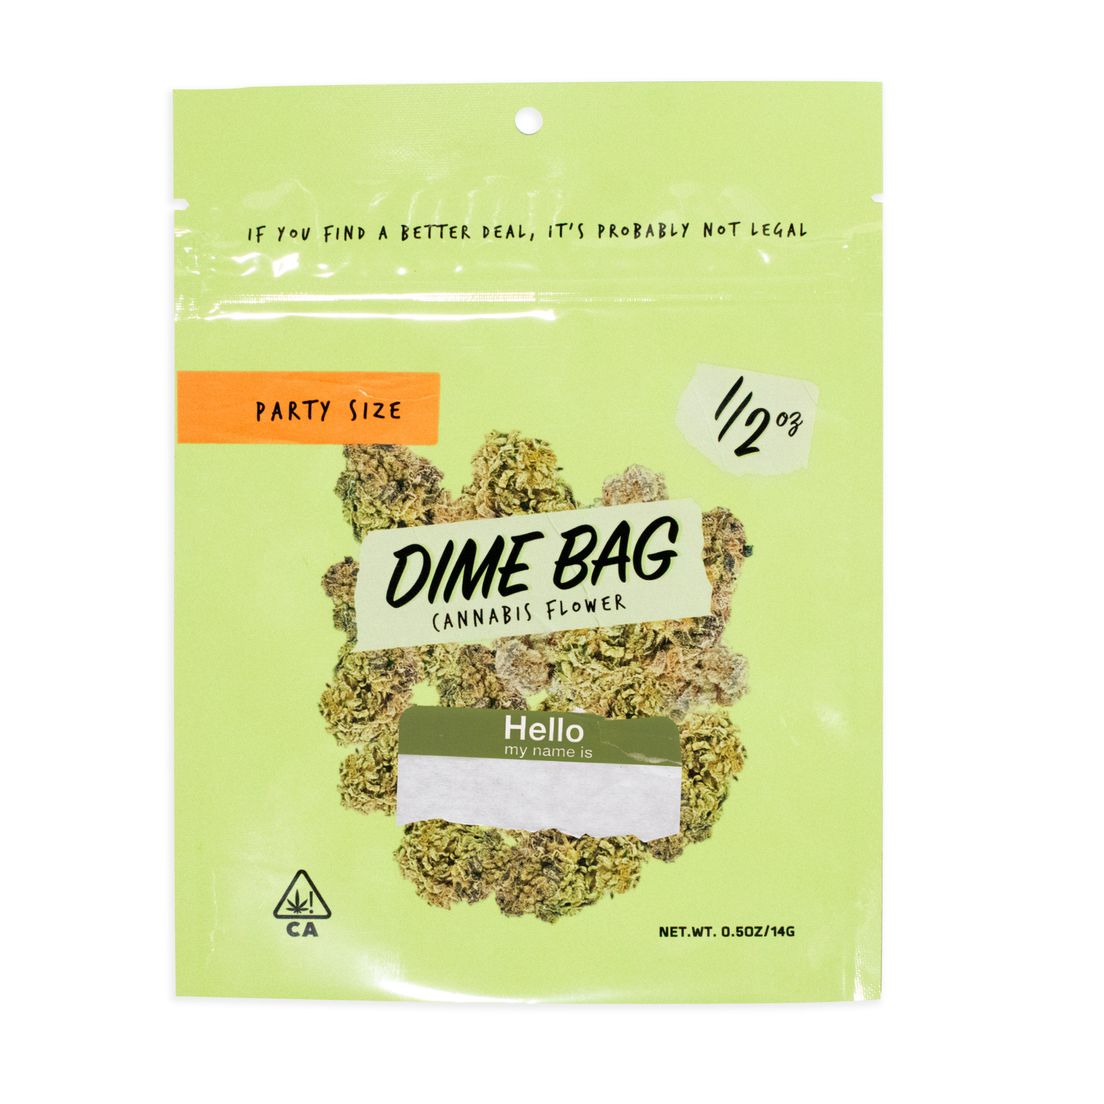 B. Dime Bag 14g Flower - Quality 7.5/10 - Mac 1